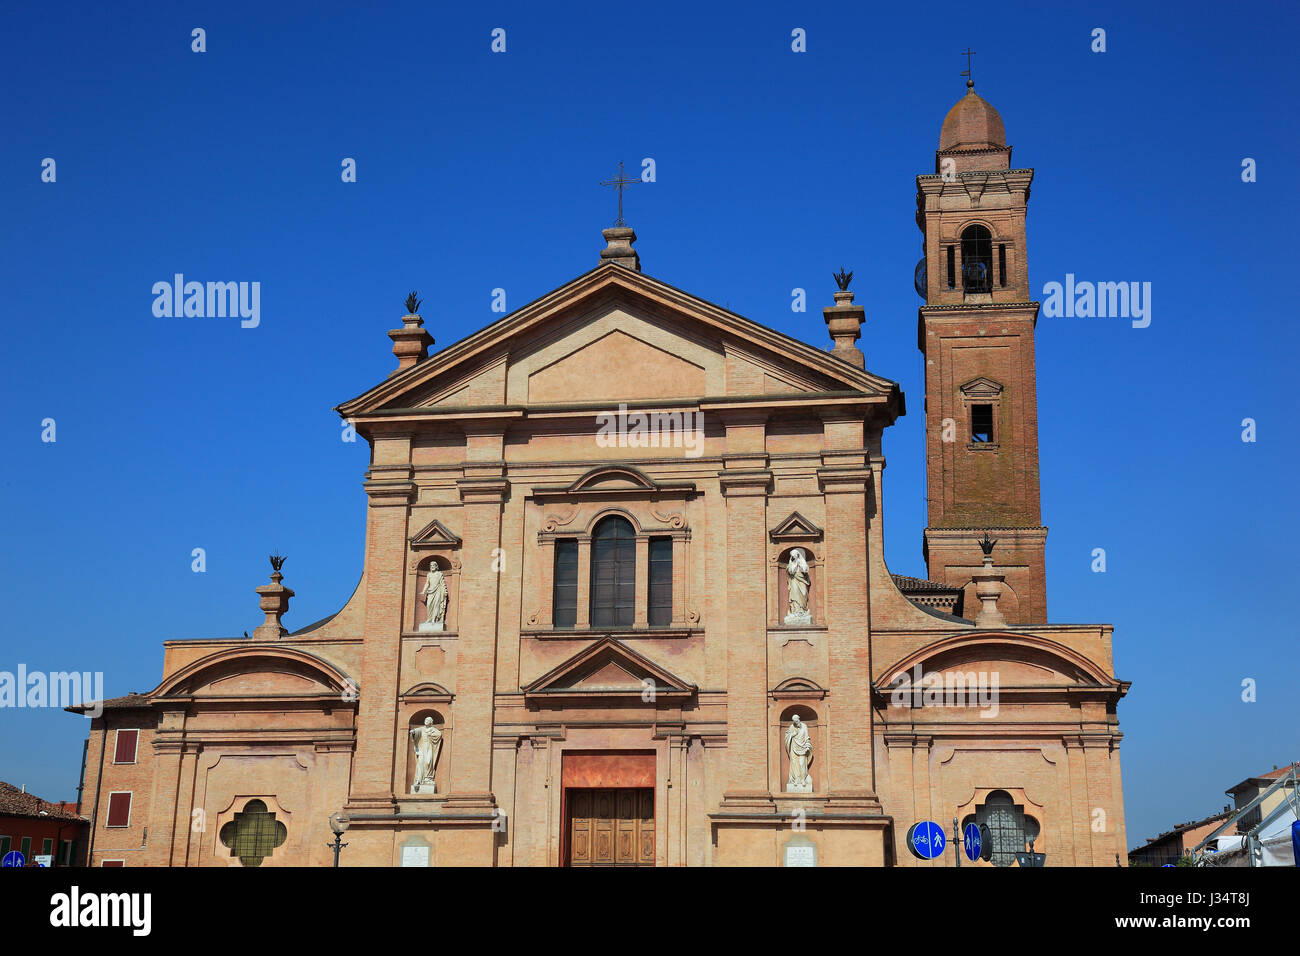 Piazza Unita and the abbey church Santo Stefano in der Stadt Novellara, Novellara, Province of Reggio Emilia, Emilia-Romagna, Italy Stock Photo